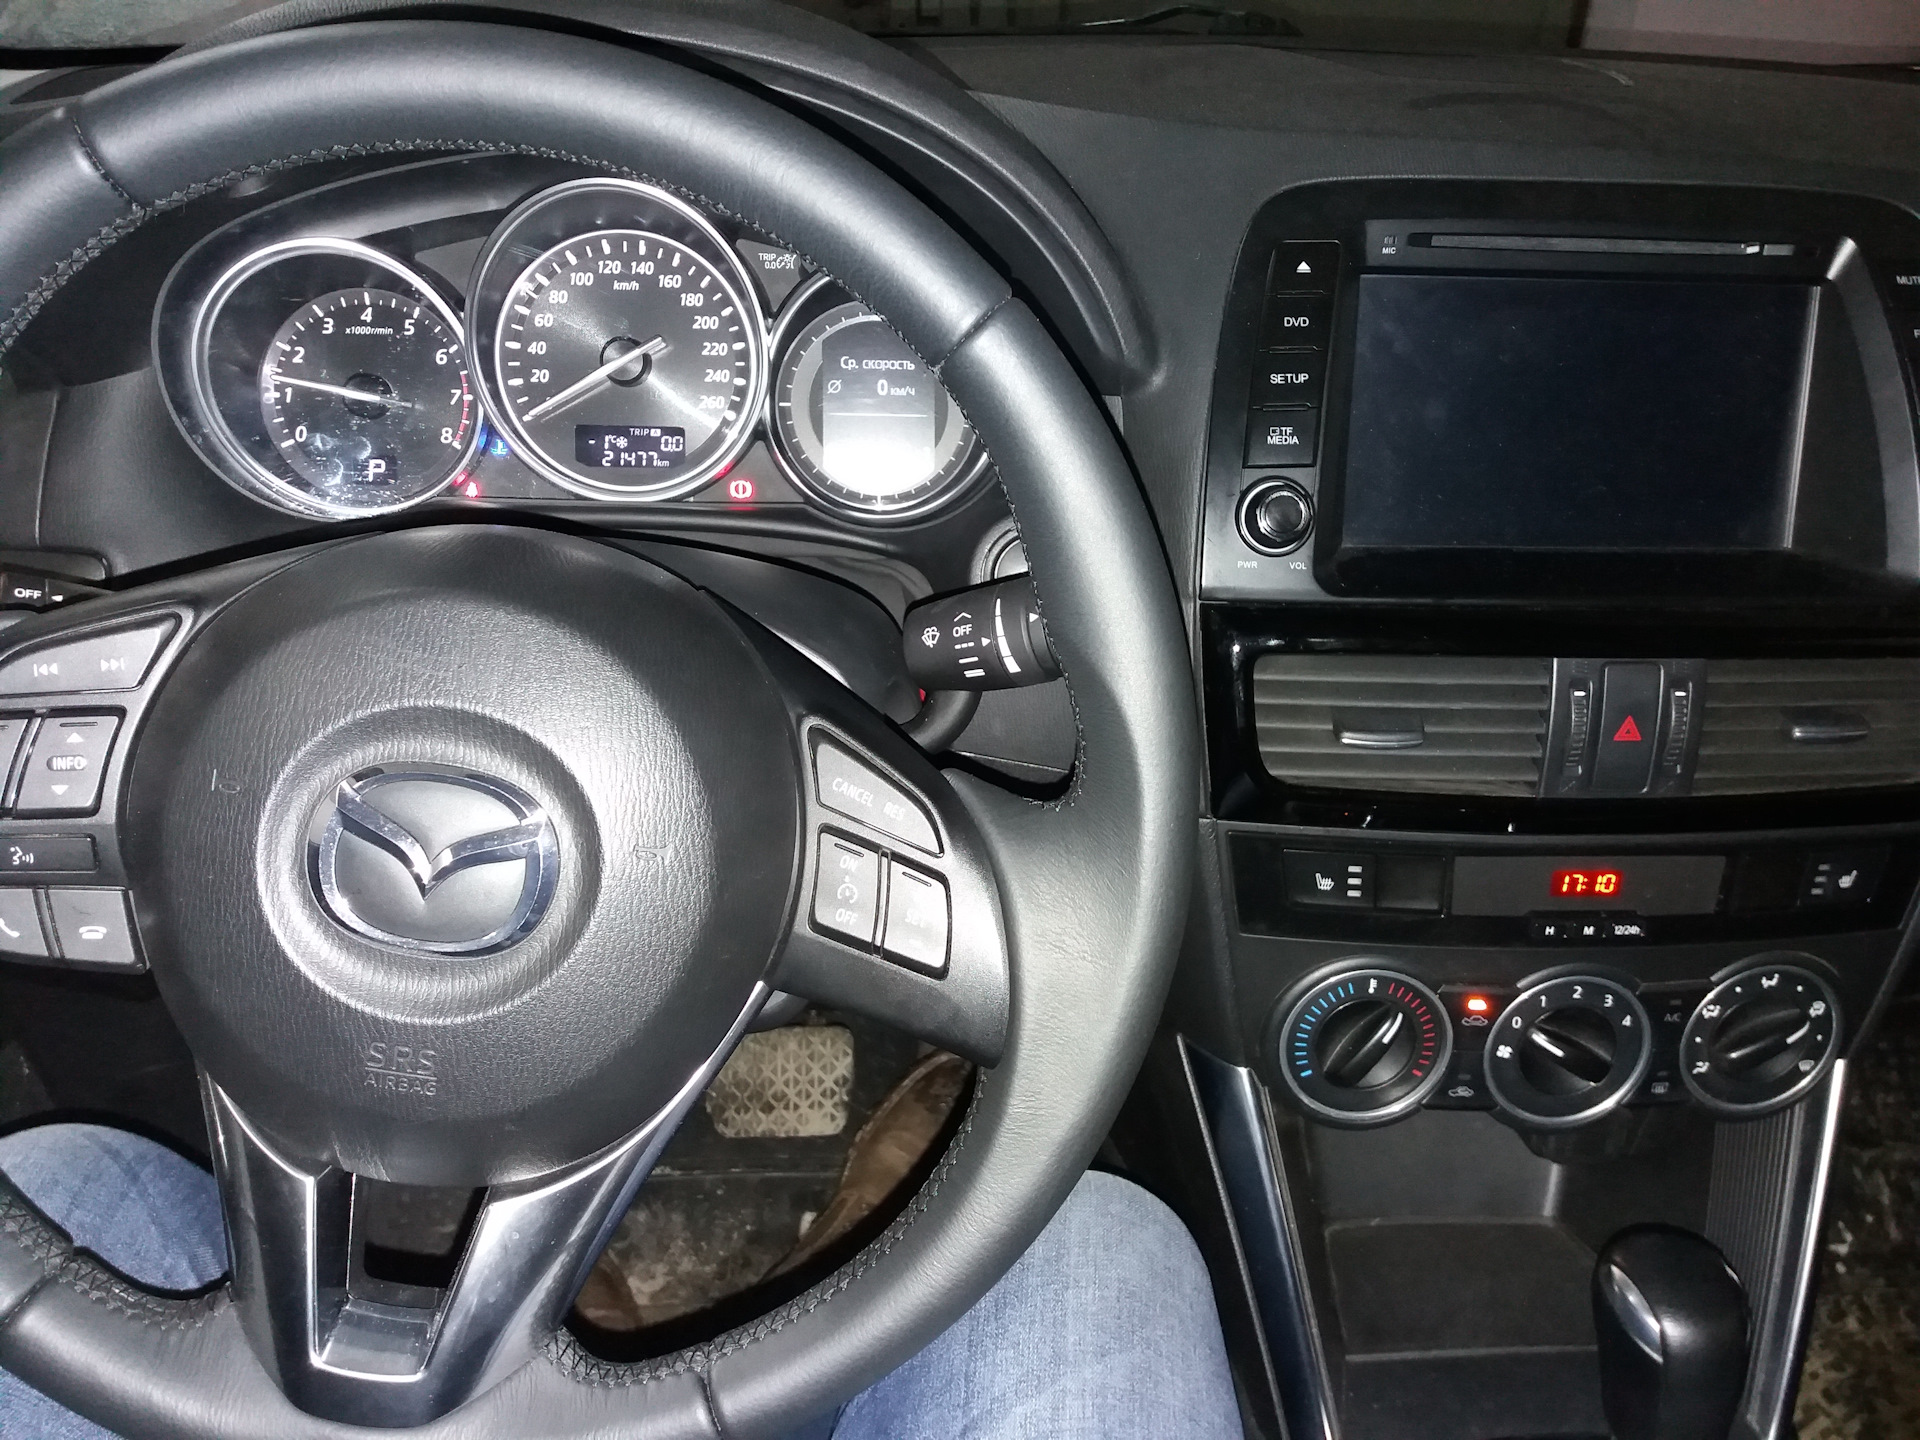 Управление мазда сх5. Панель Мазда сх5. Mazda CX 5 приборка. Панель управления Мазда сх5. Панель Mazda CX 5 2014.